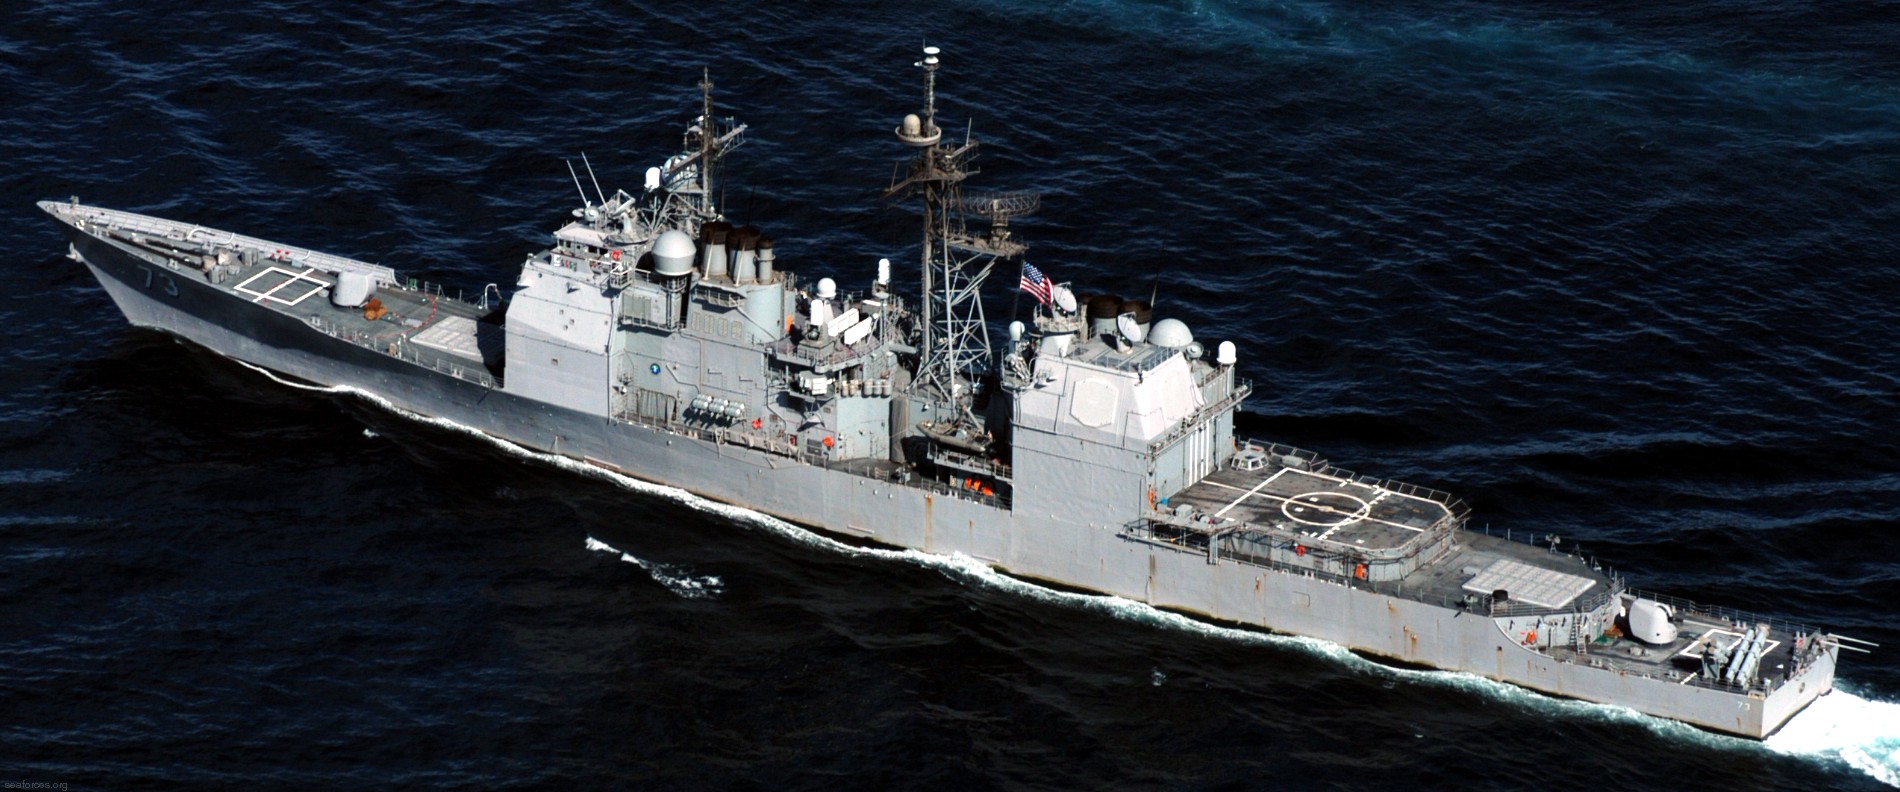 cg-73 uss port royal ticonderoga class guided missile cruiser navy 37 arabian sea